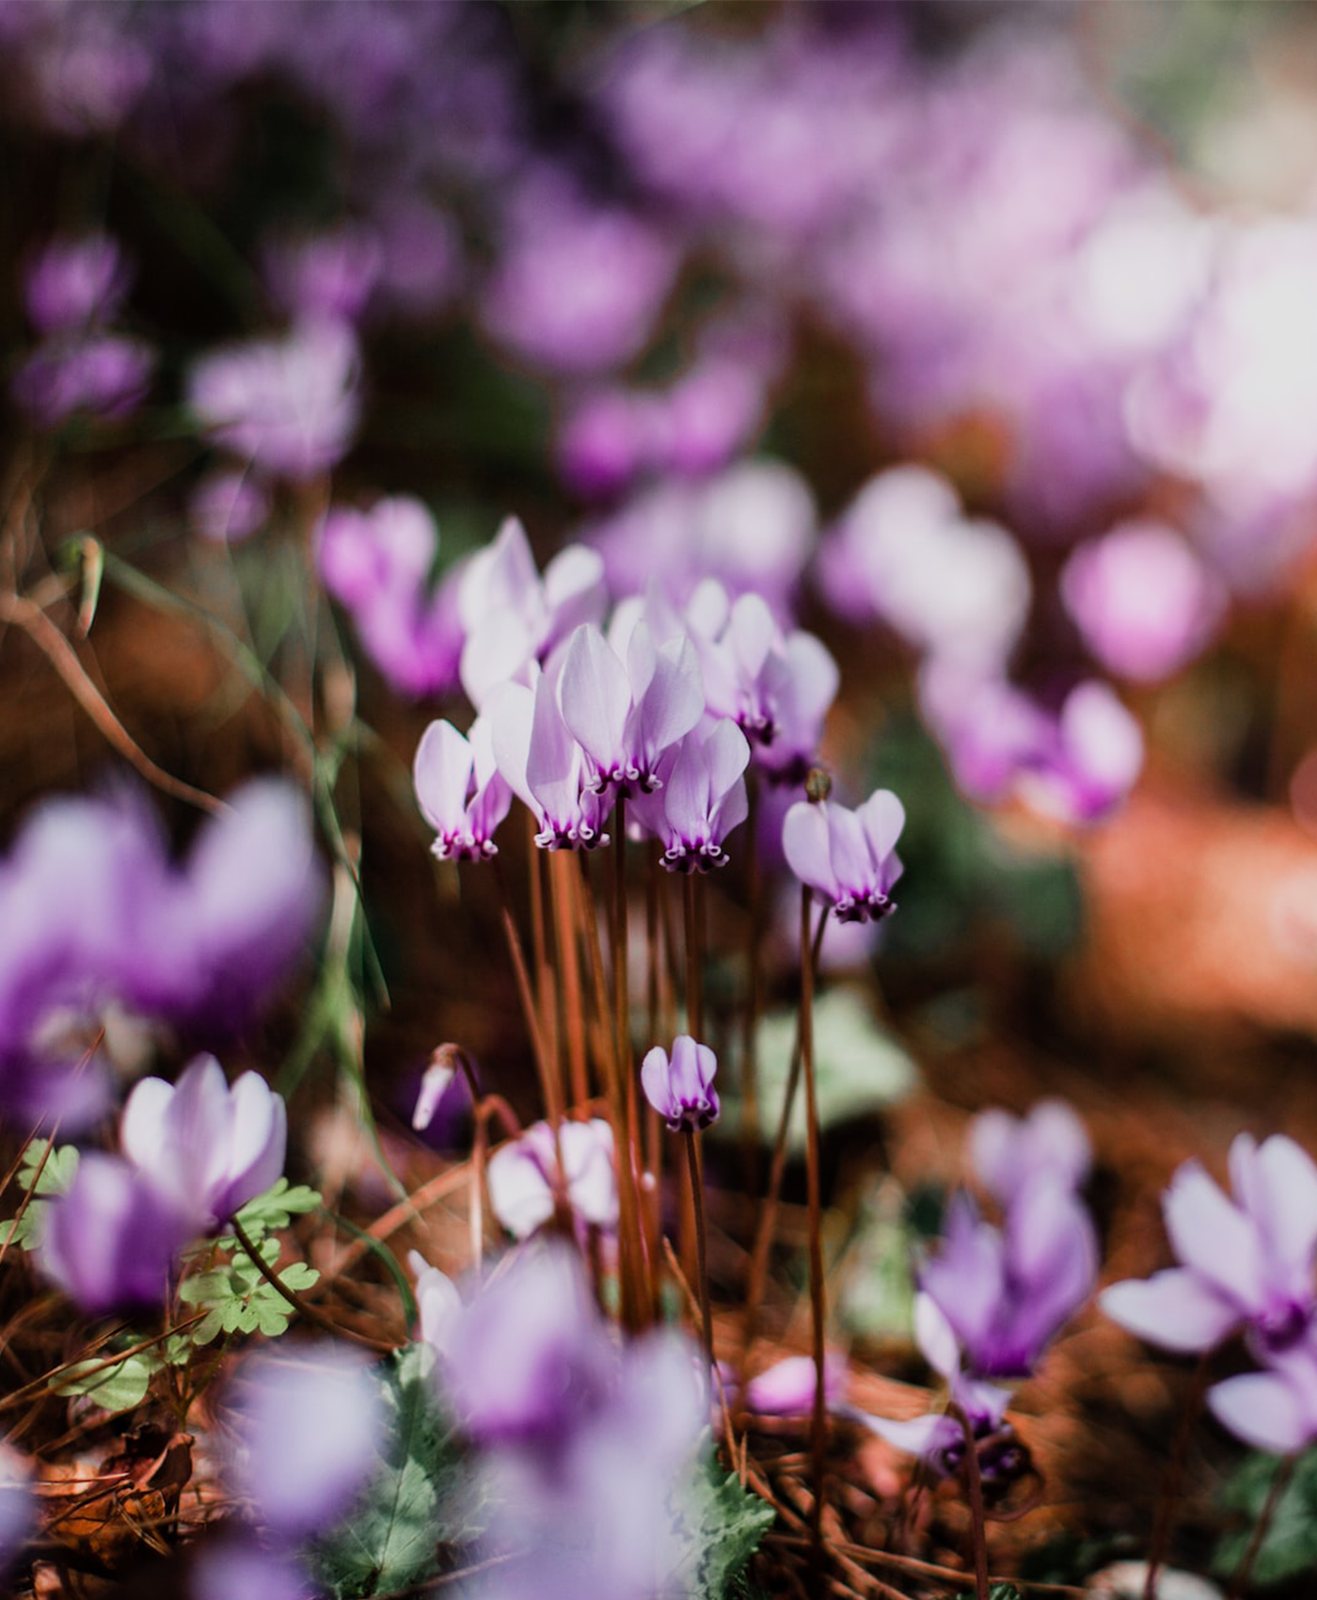 Des cyclamens violets en pleine terre